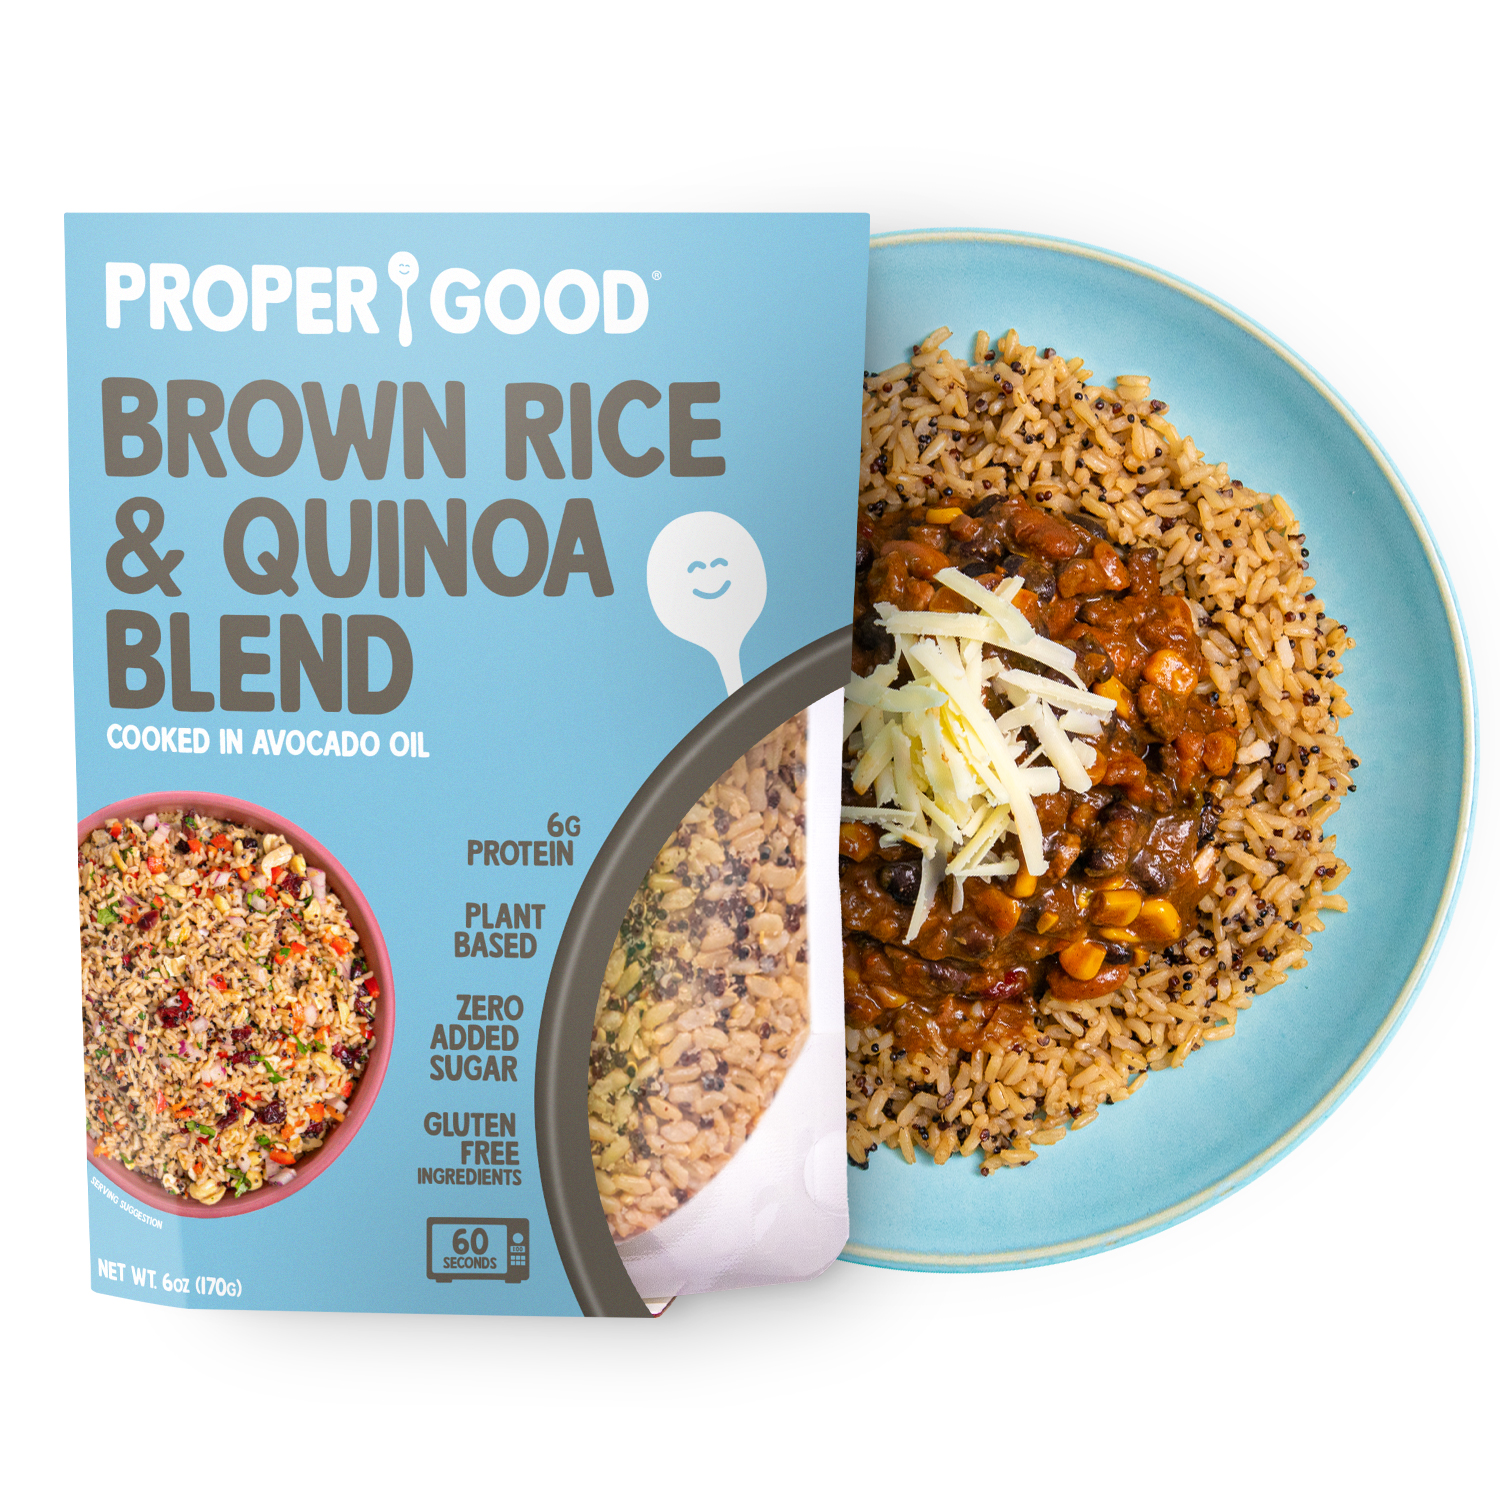 Proper Good's Brown Rice & Quinoa Blend